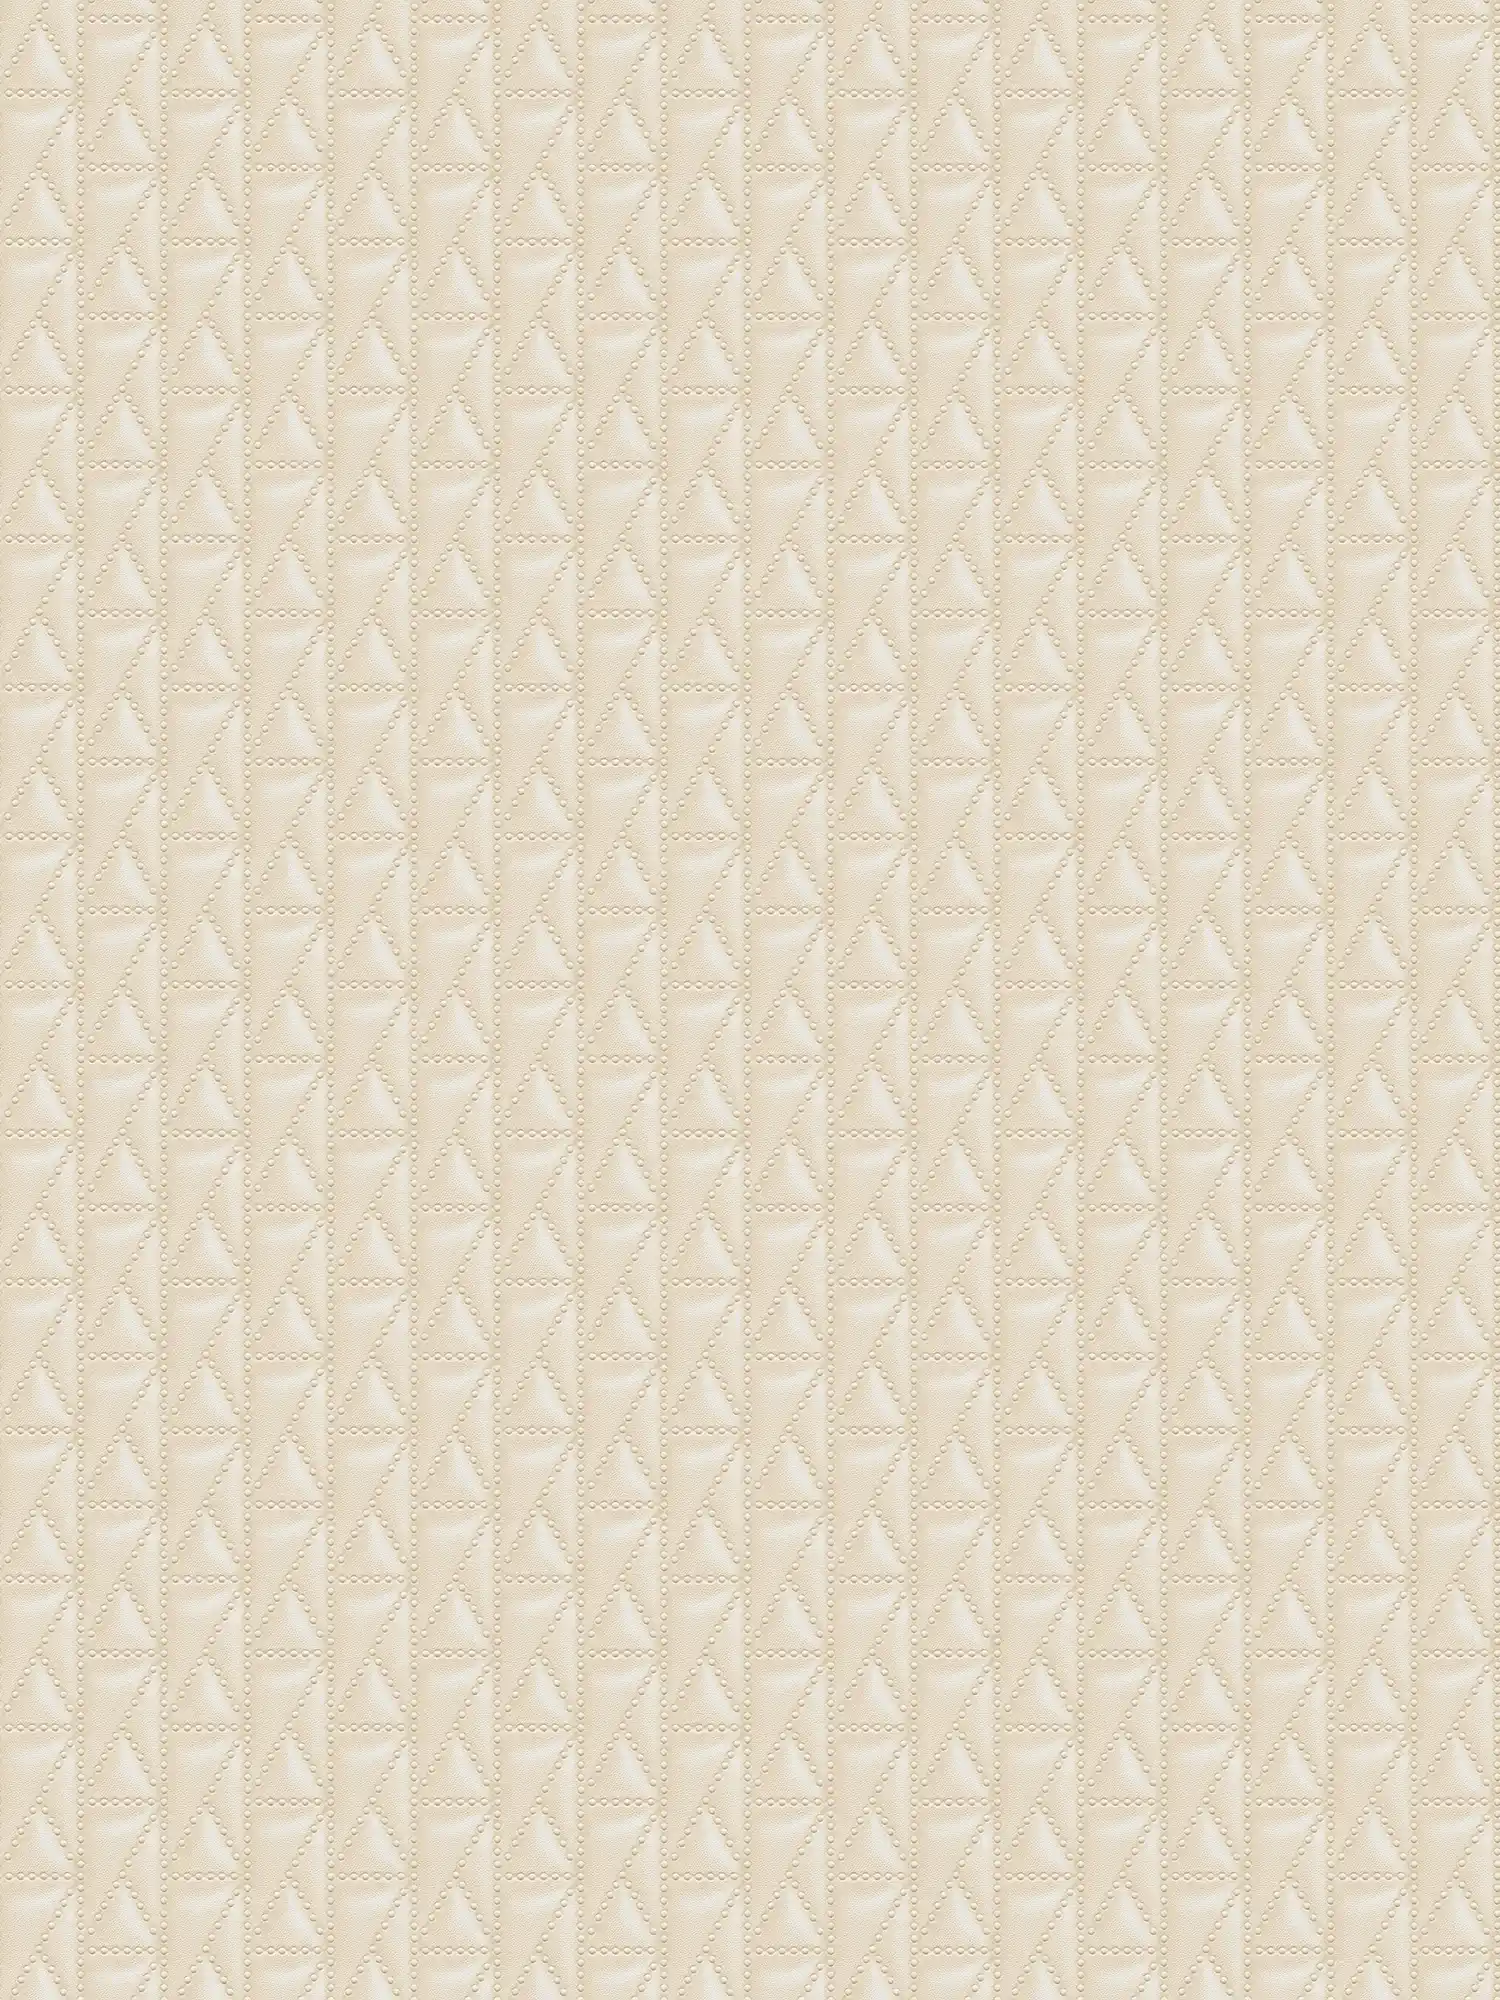 Karl LAGERFELD wallpaper Kuilted Bag Design - Beige, Cream
